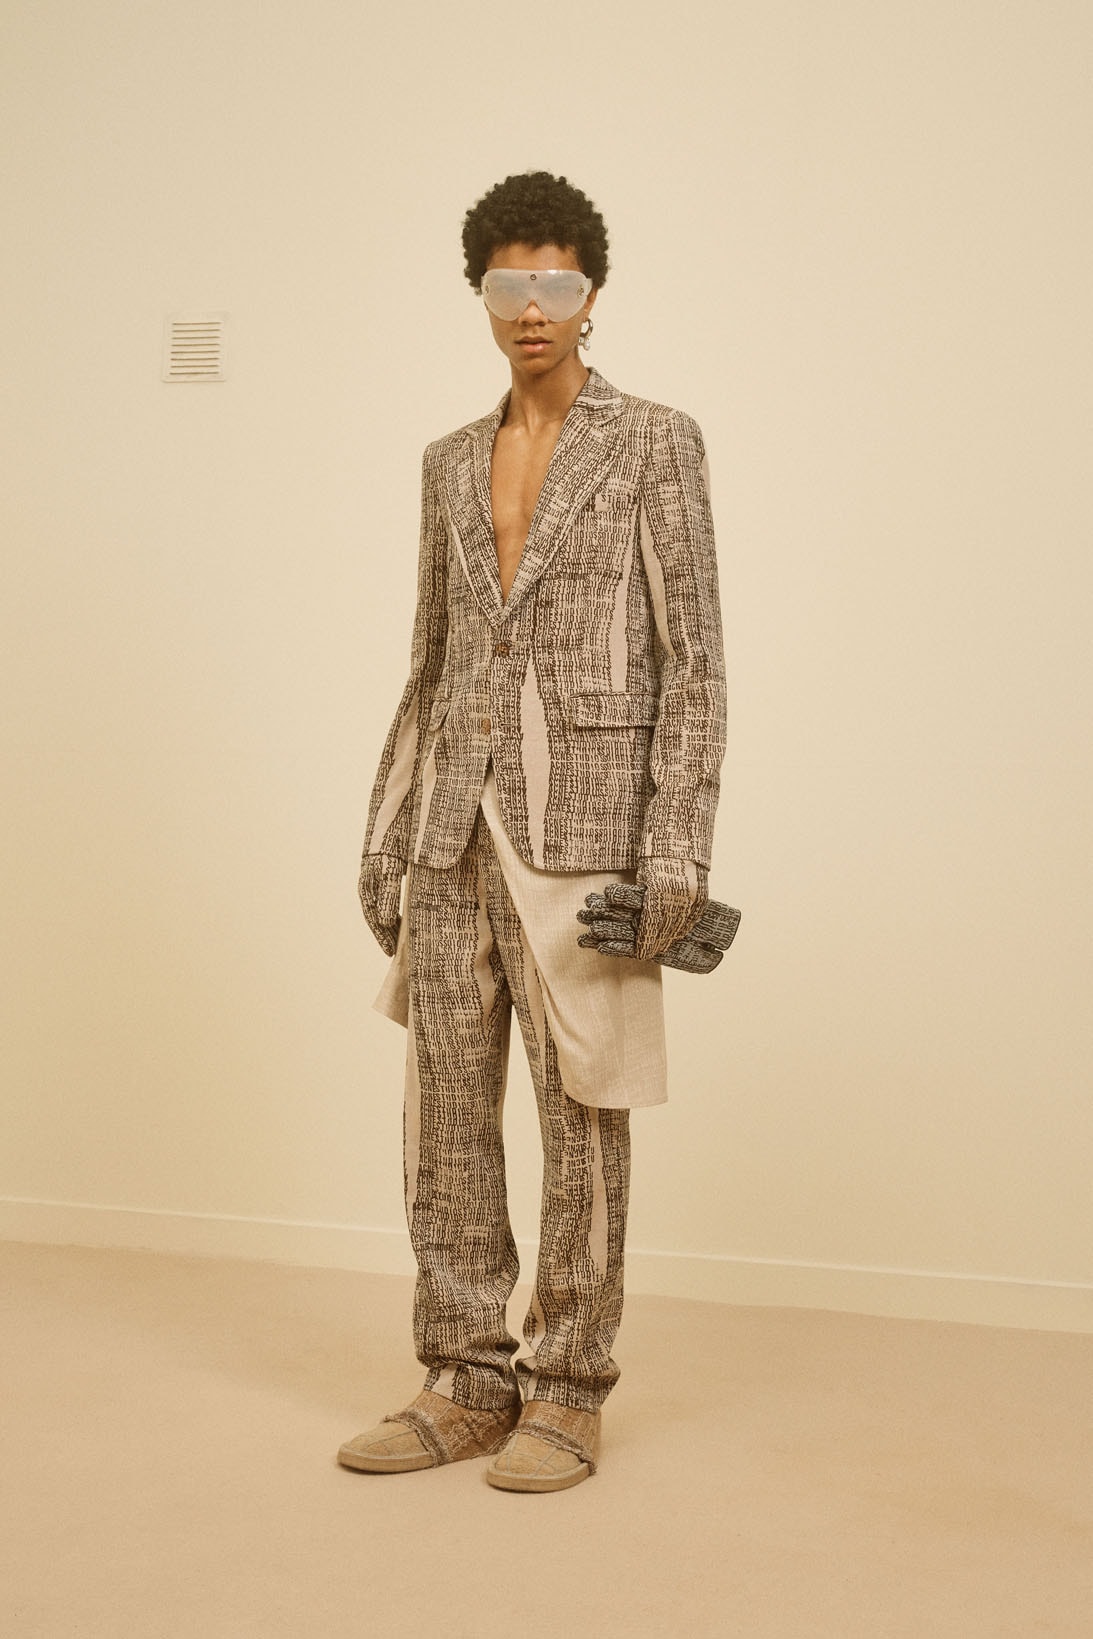 acne studios menswear fall winter 2021 fw21 collection lookbook tweed pattern jacket suit